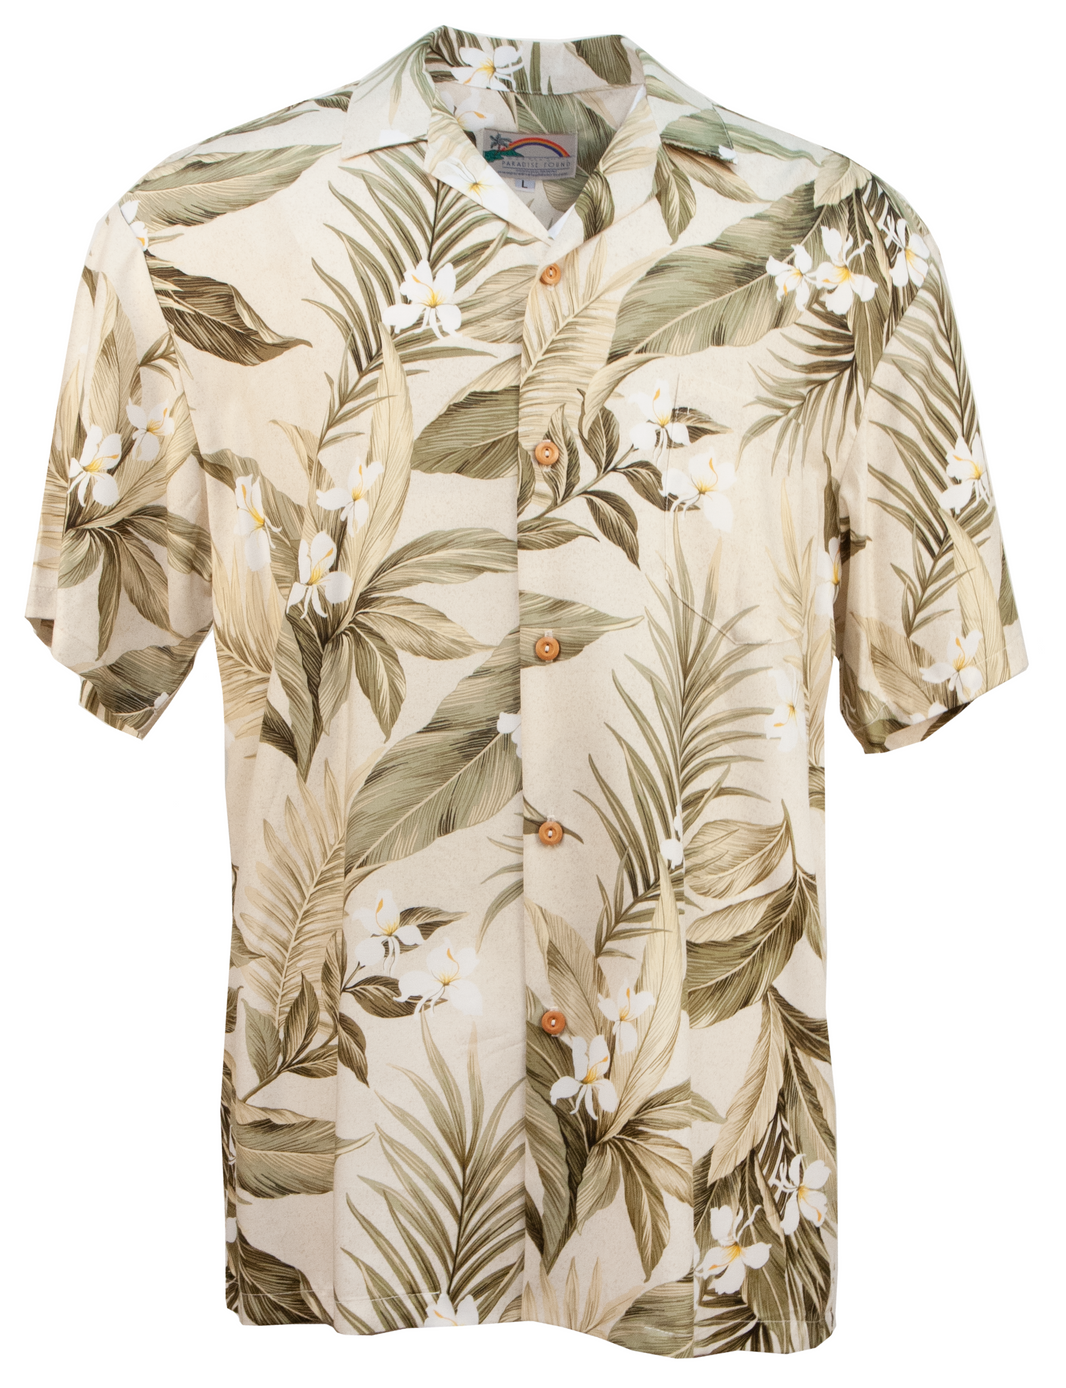 Tropical Hawaiian Clothing - Paradise Clothing Co - Free US Shipping